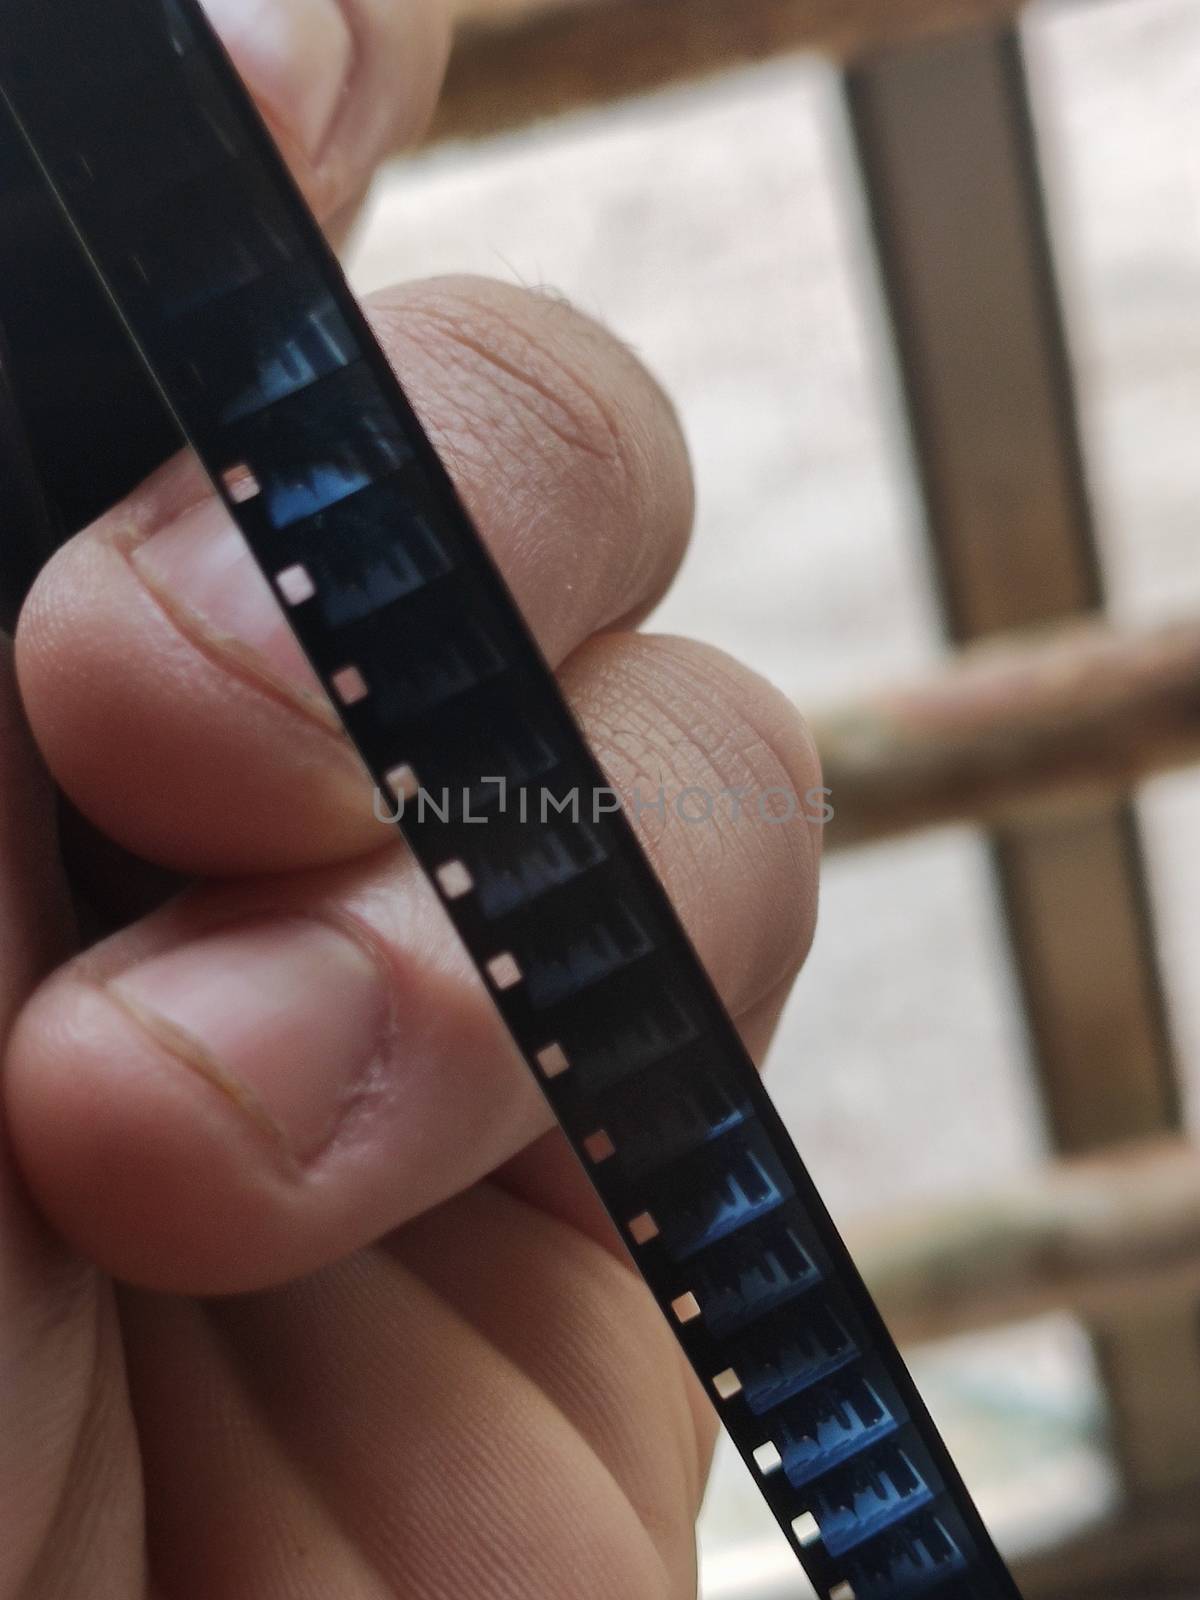 Old 8mm film taken in hand in macro detail